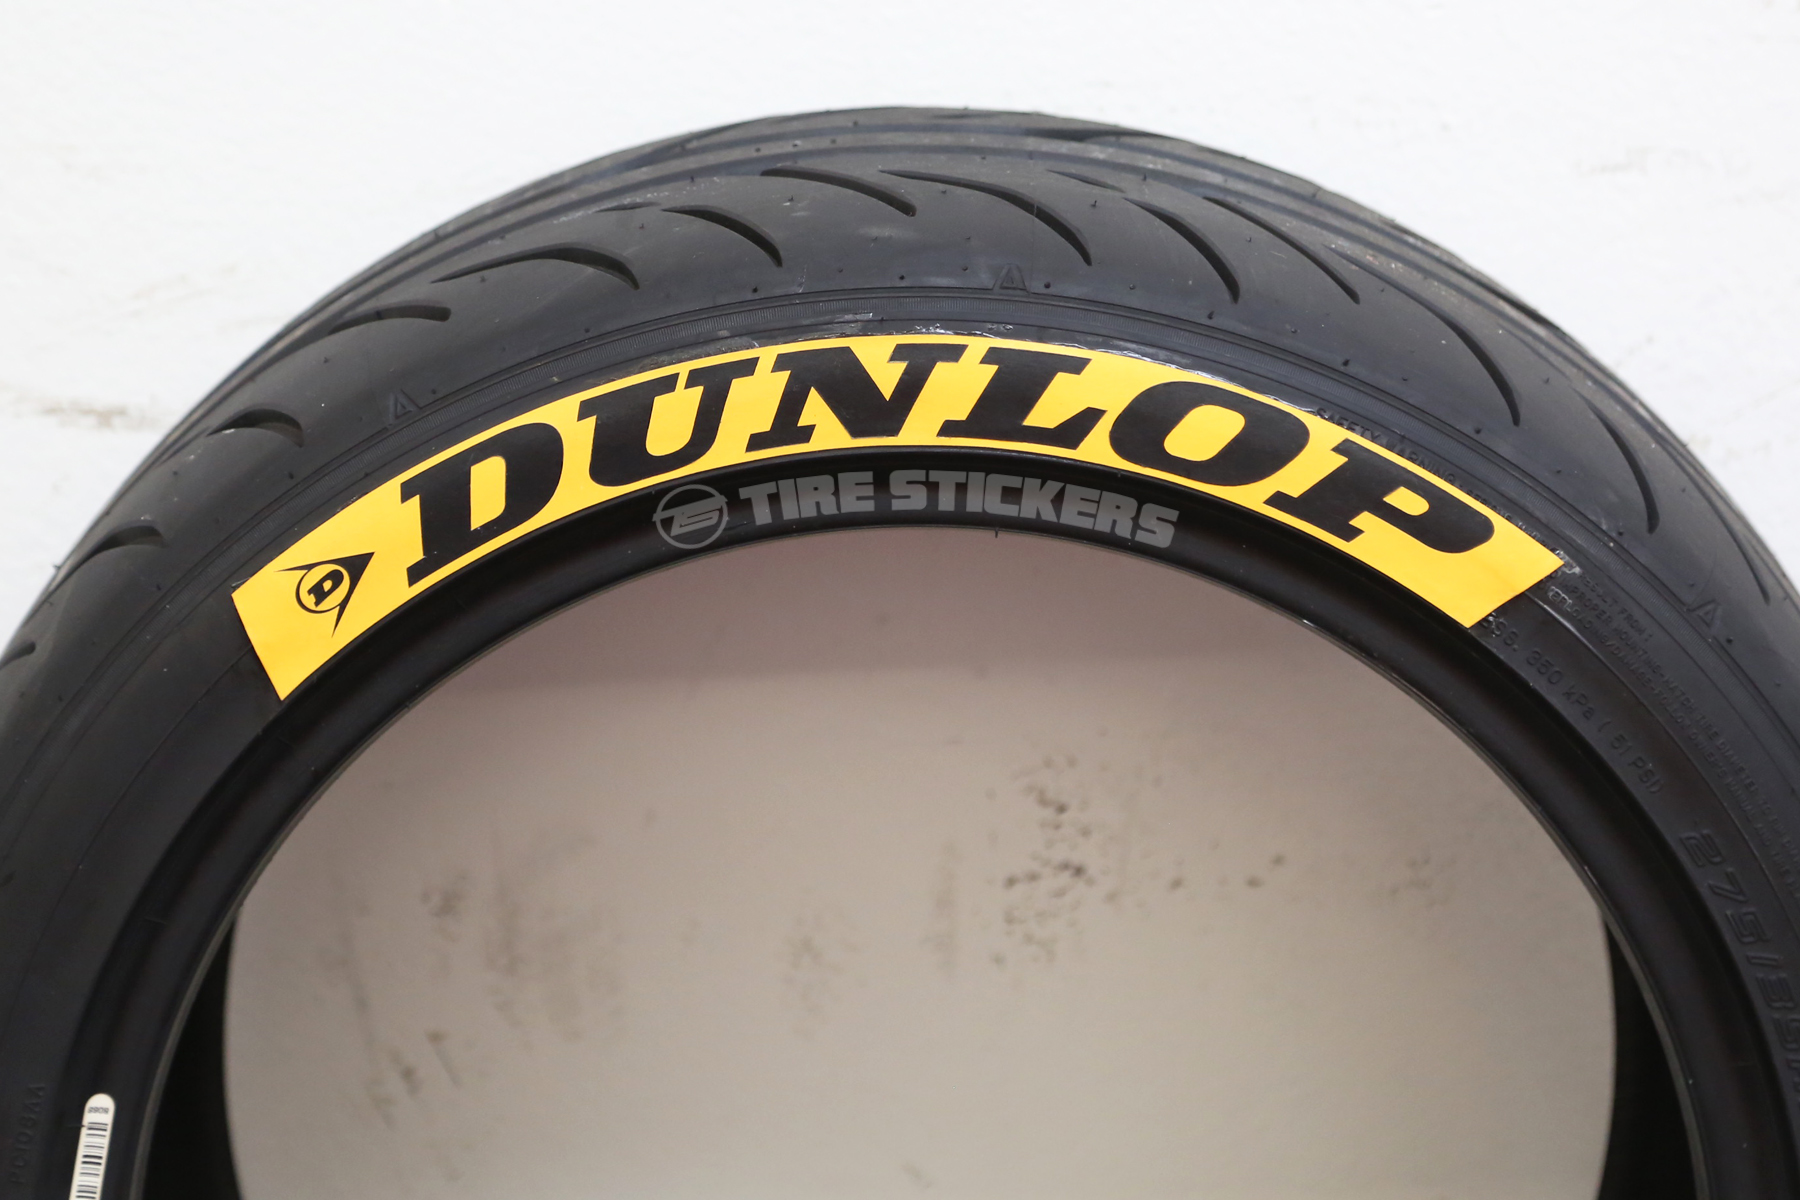 More 16" Dunlop Tire Stencil For Paint Falken Kumho Michellin Bridgestone Toyo